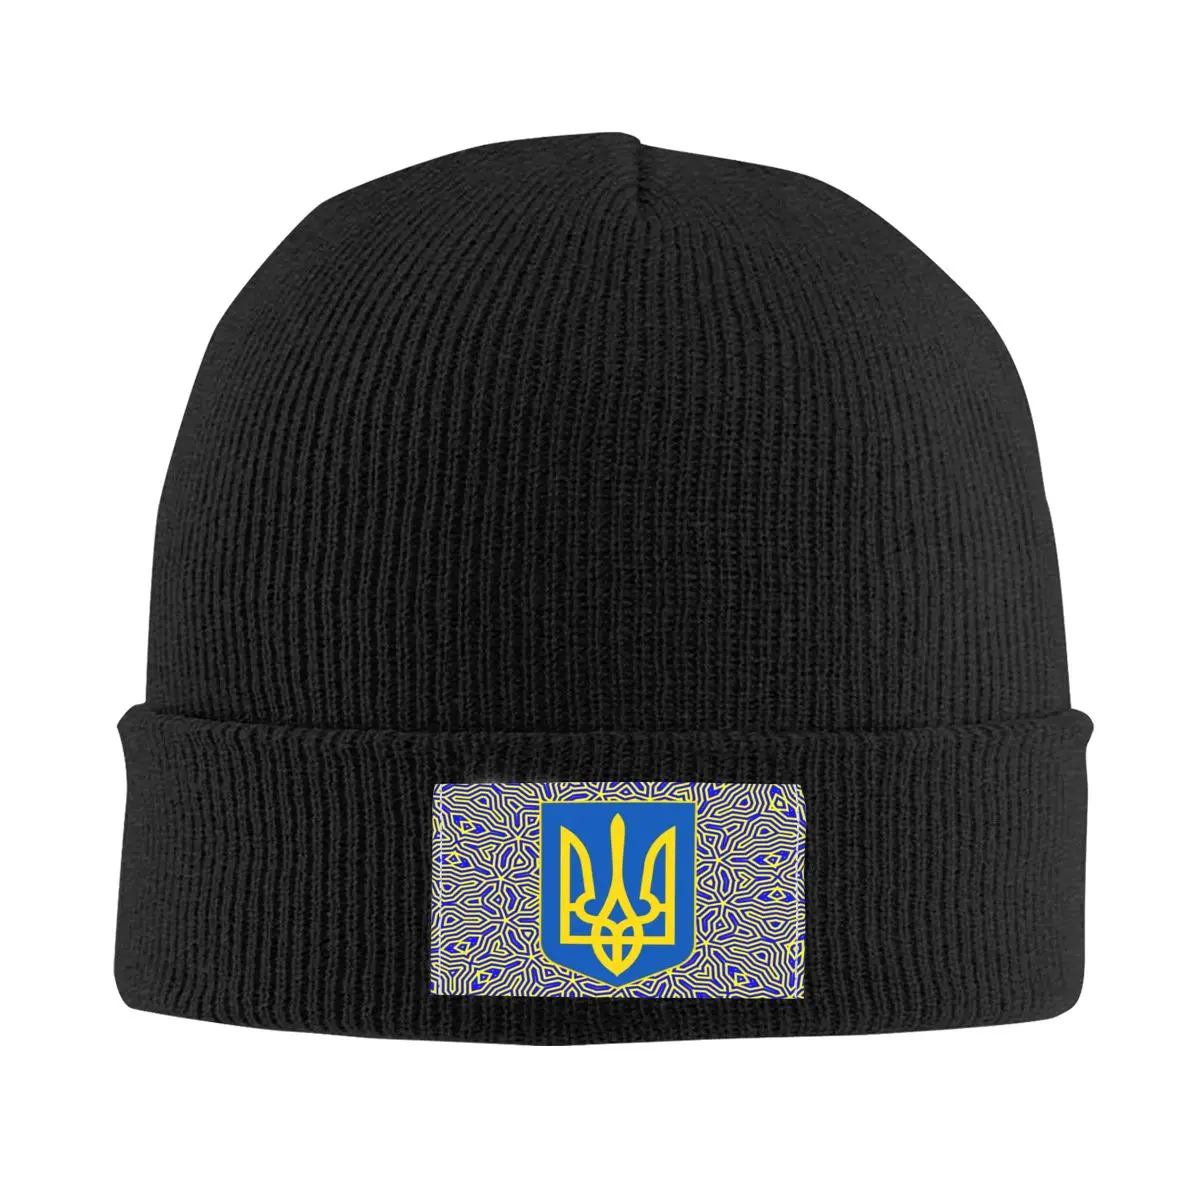 Ukraine Flag Skullies Beanies Caps For Men Women Unisex Cool Winter Warm Knit Hat Adult Ukrainian Coat Of Arms Bonnet Hats 1